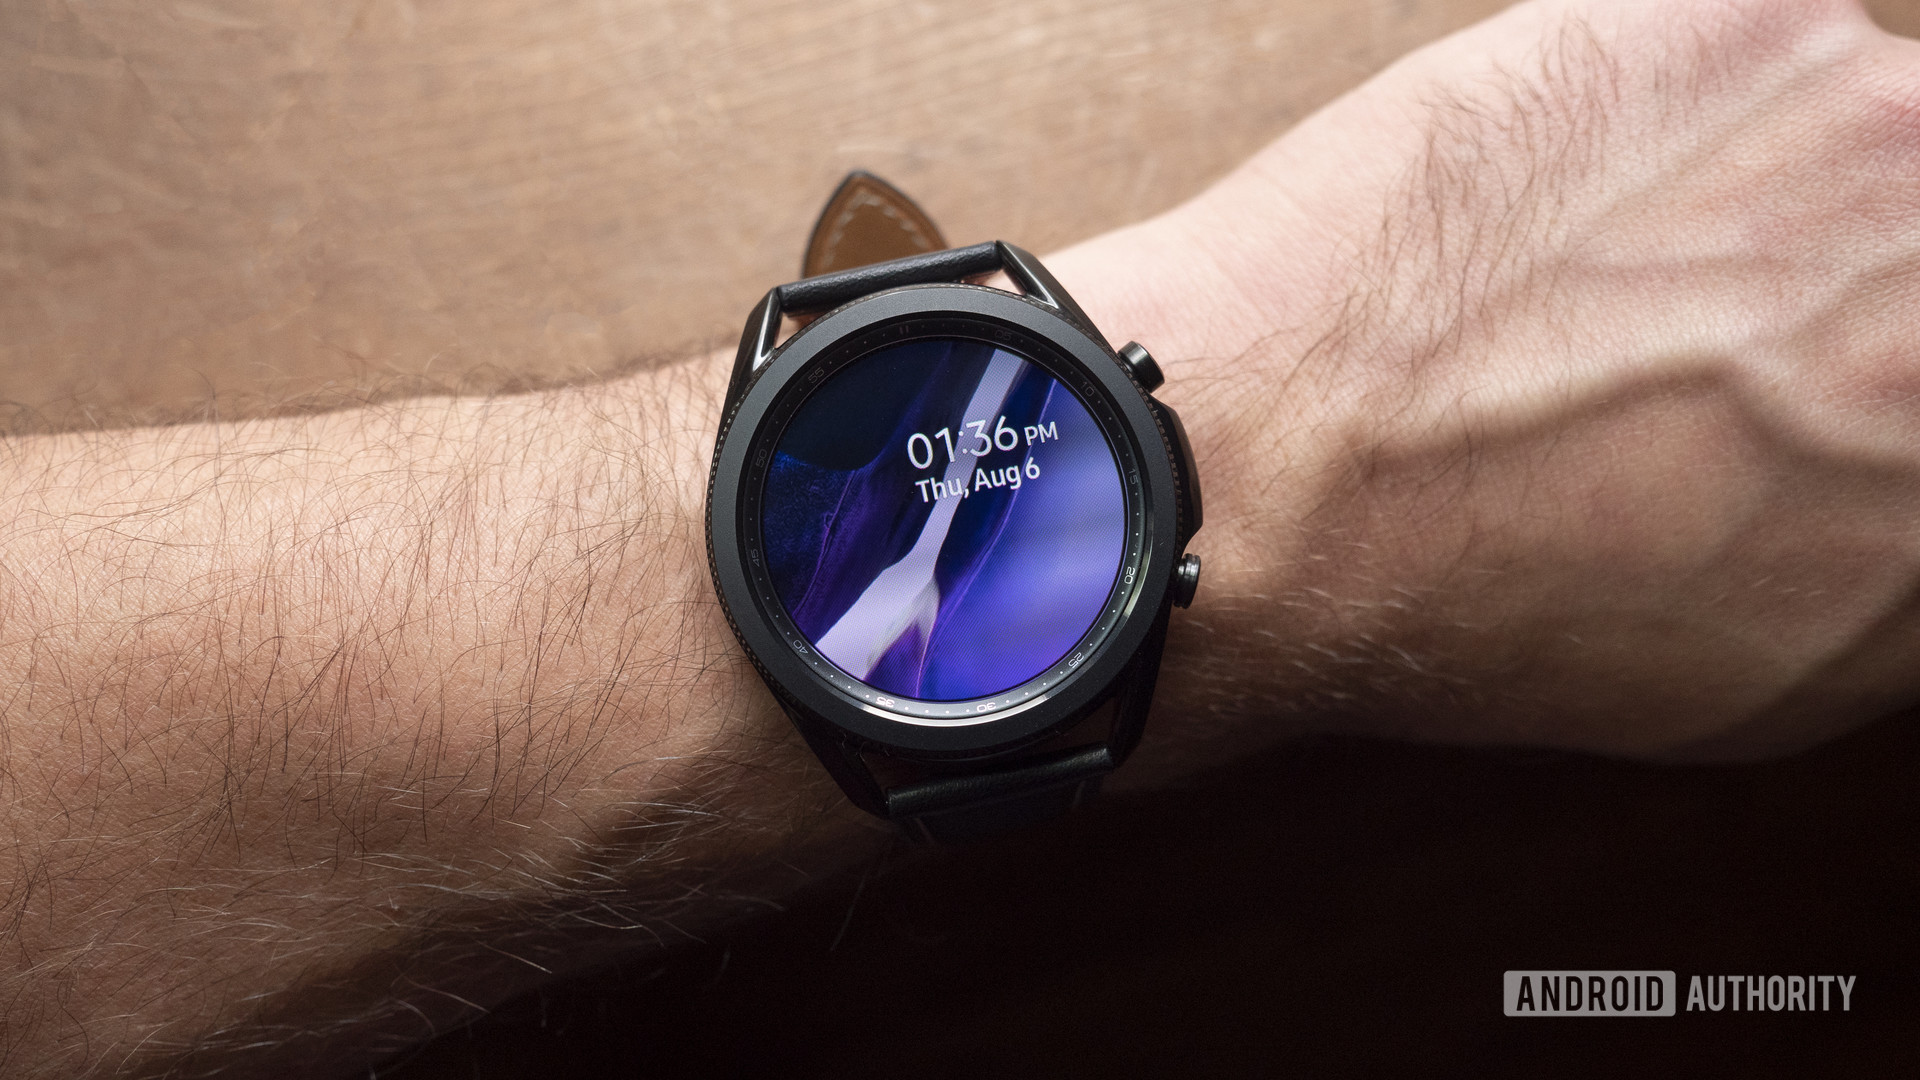 Aanhoudend Optimistisch software Samsung Galaxy Watch 3 specs, price, release date - Android Authority